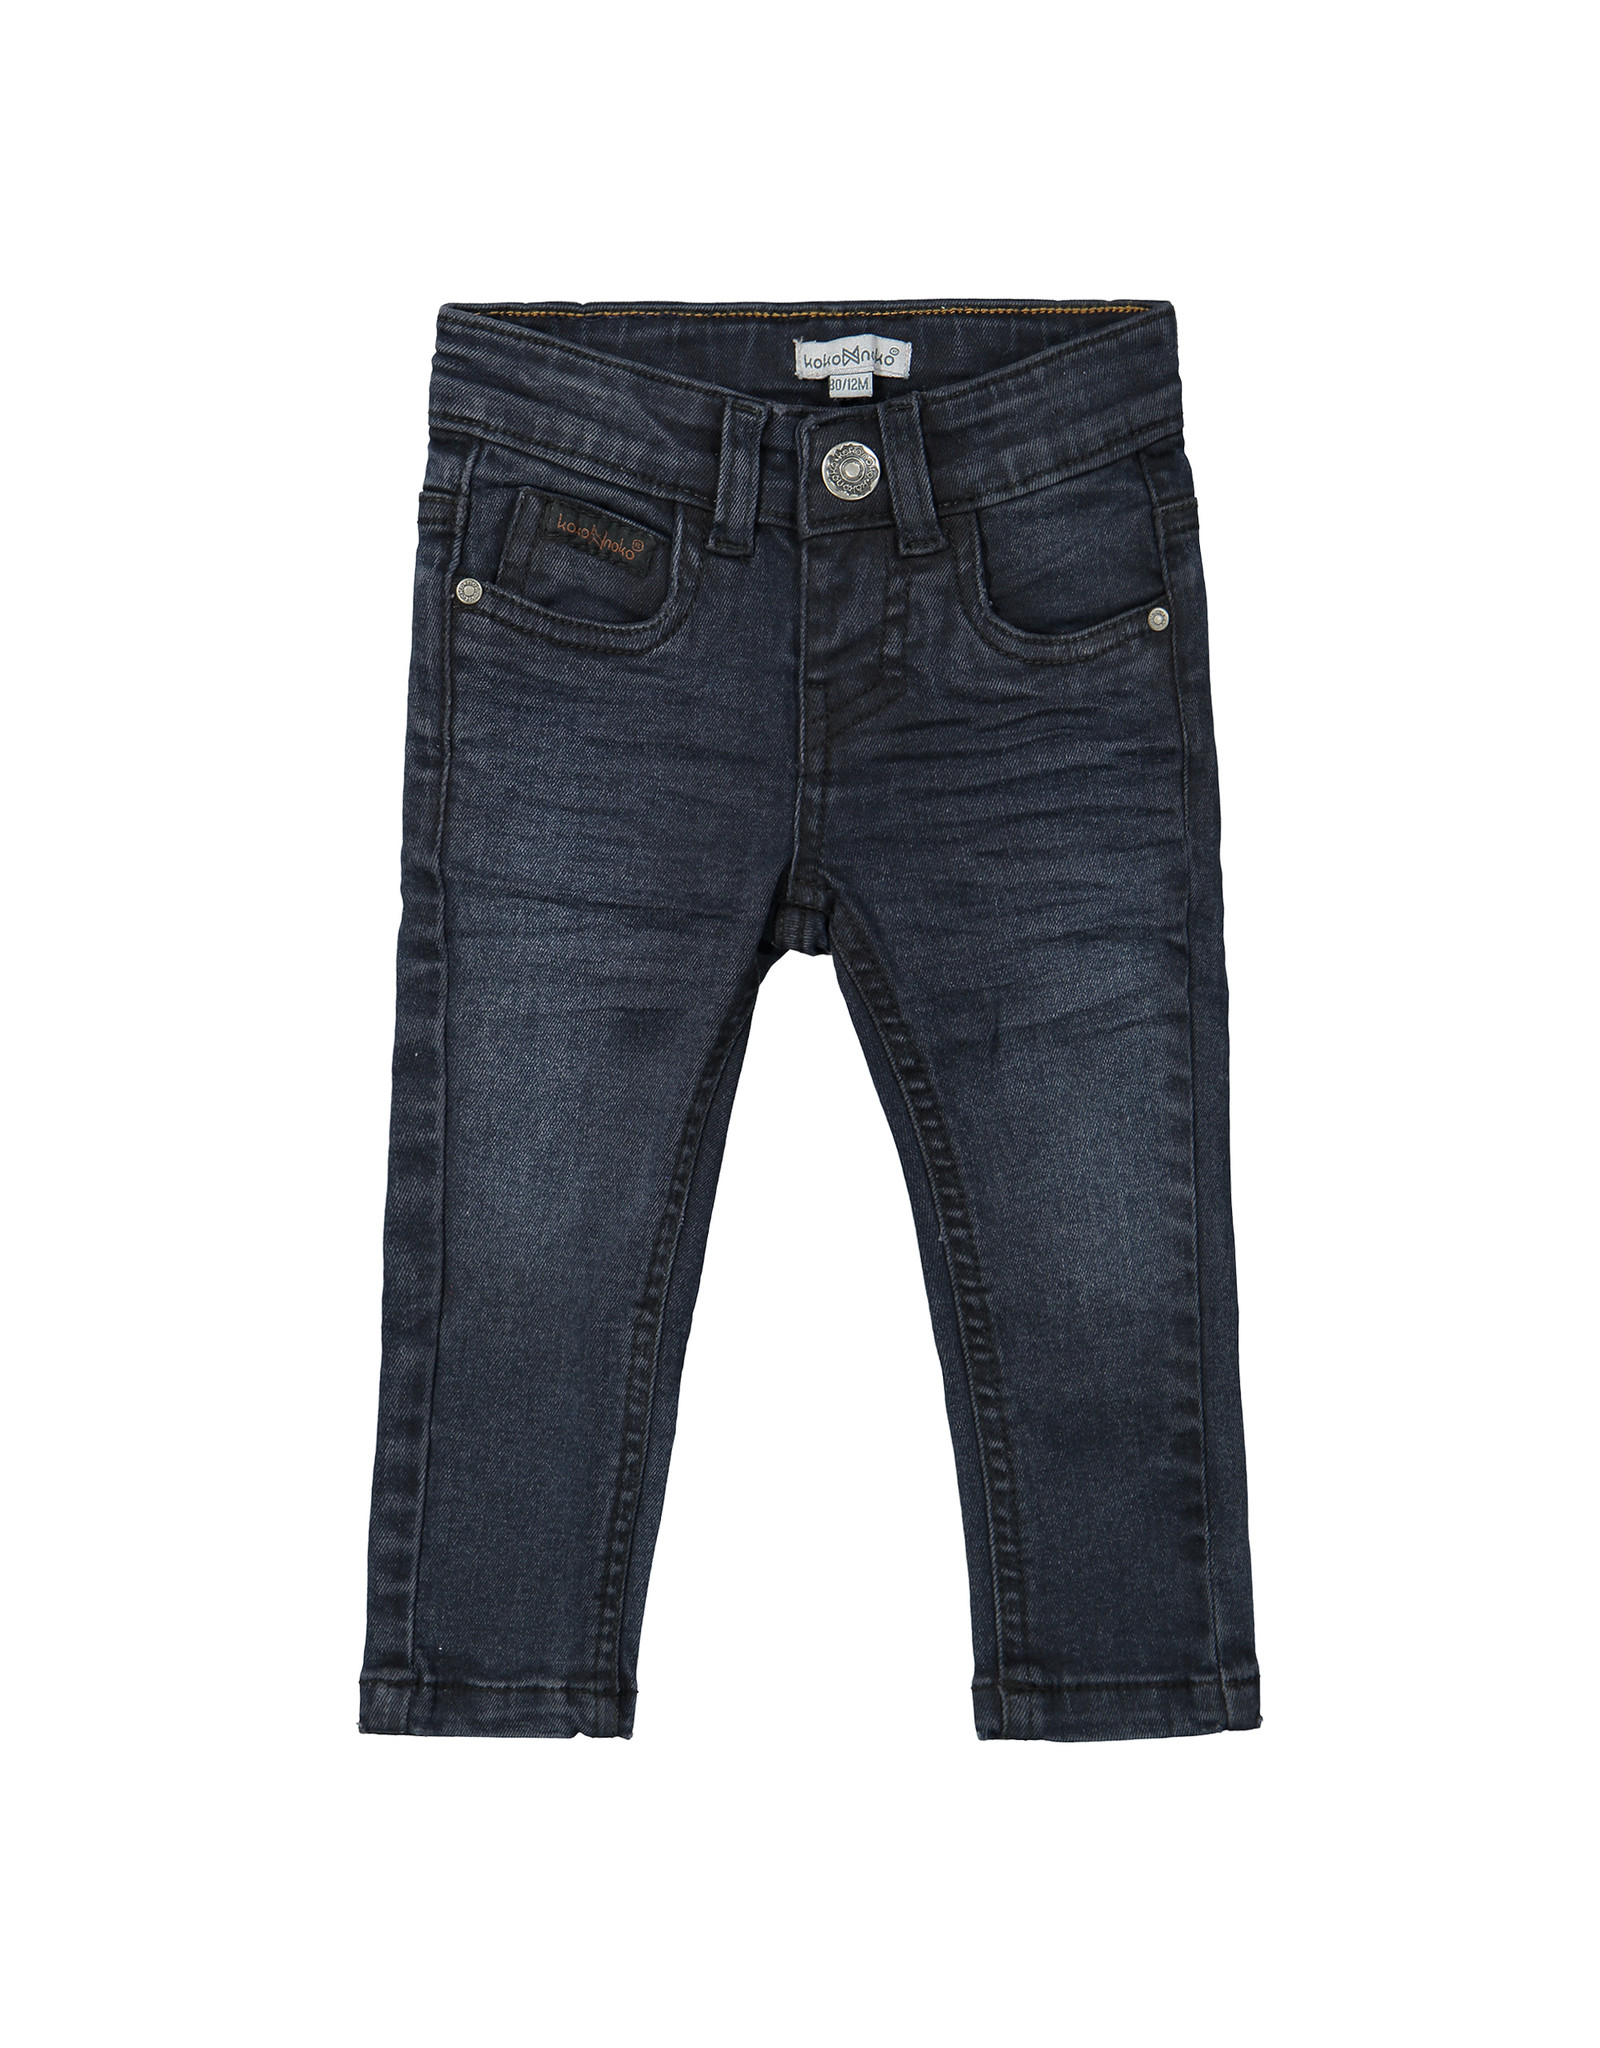 Koko Noko Boys Jeans, Blue jeans, F40809-37